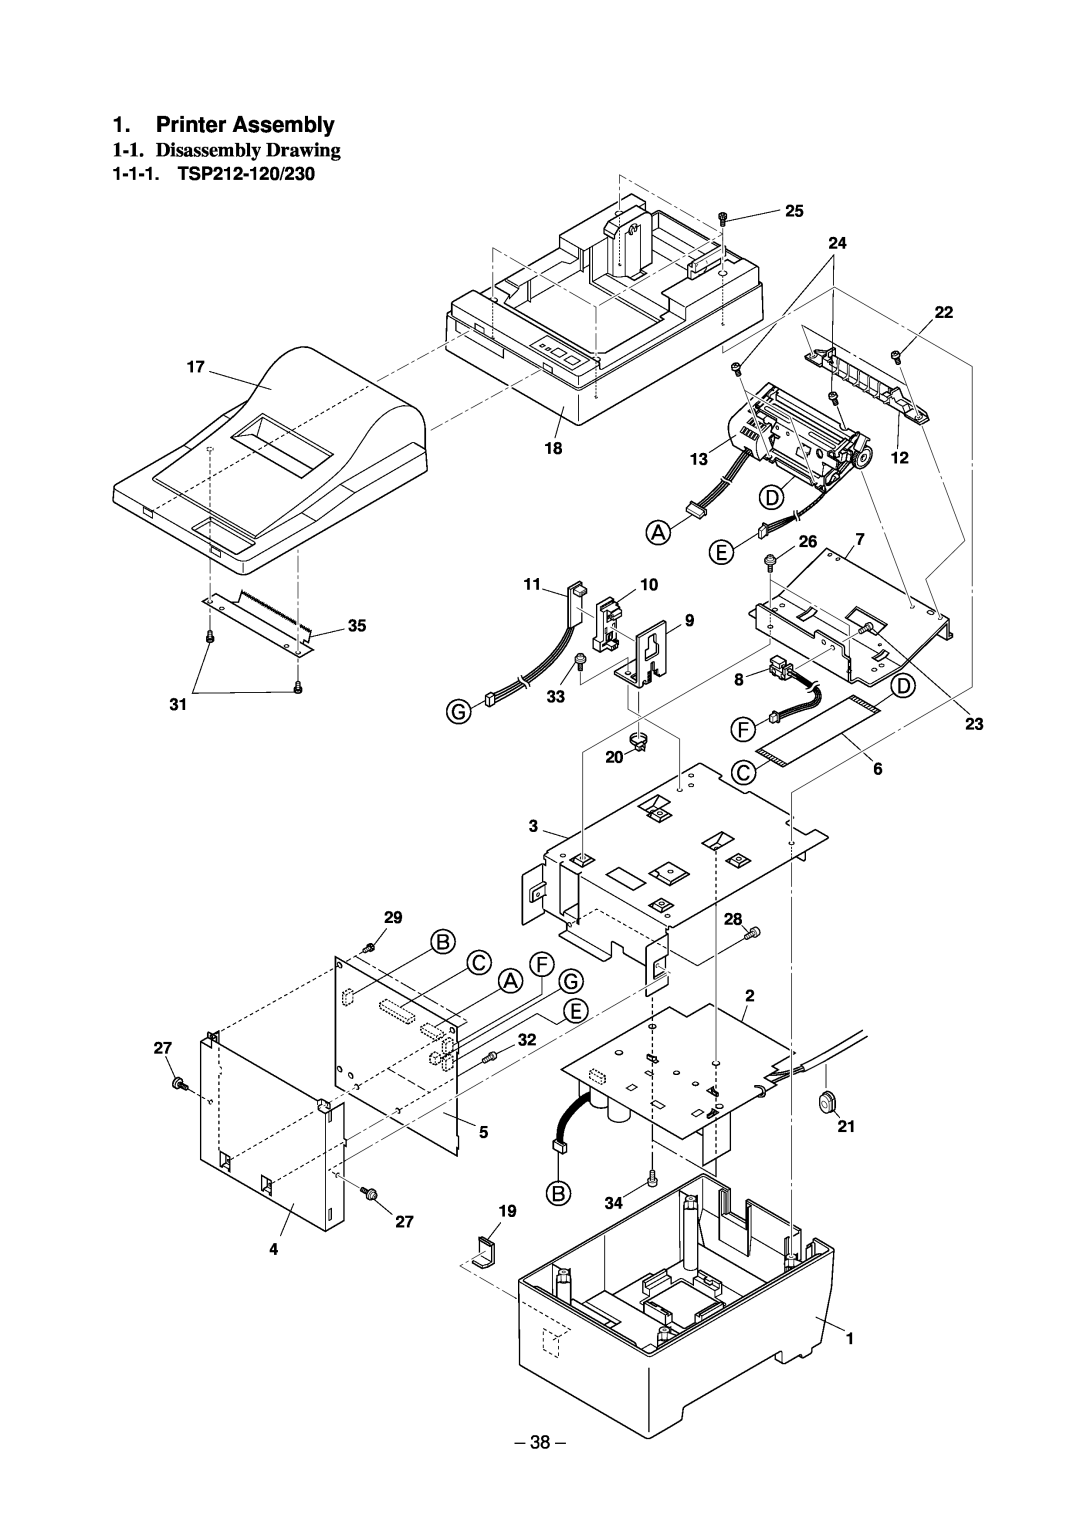 Star Micronics TSP200 technical manual B C Afg E, Printer Assembly, Disassembly Drawing, 19 B 